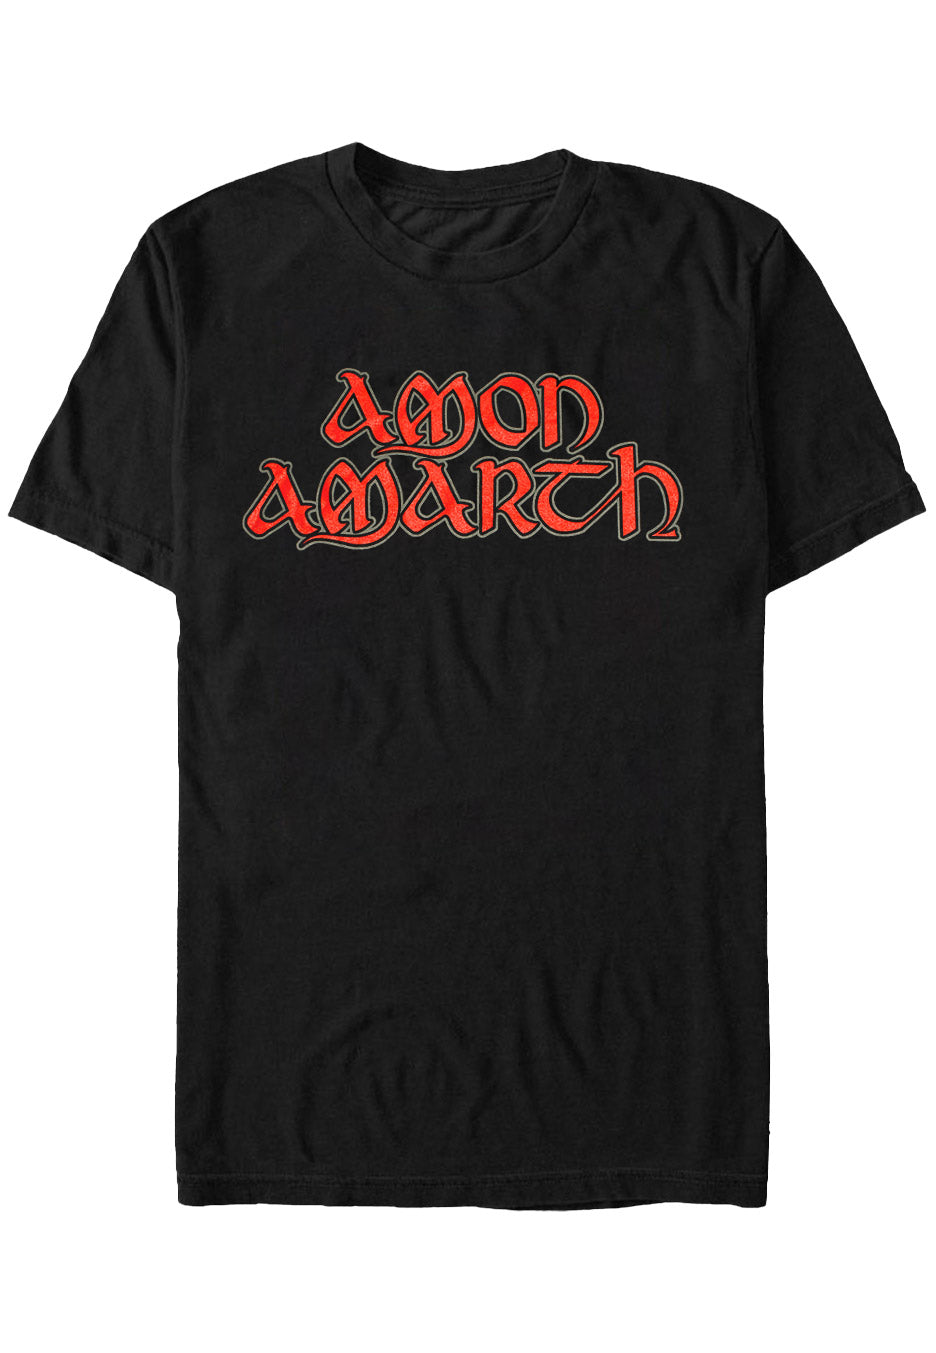 Amon Amarth - We Want You - T-Shirt